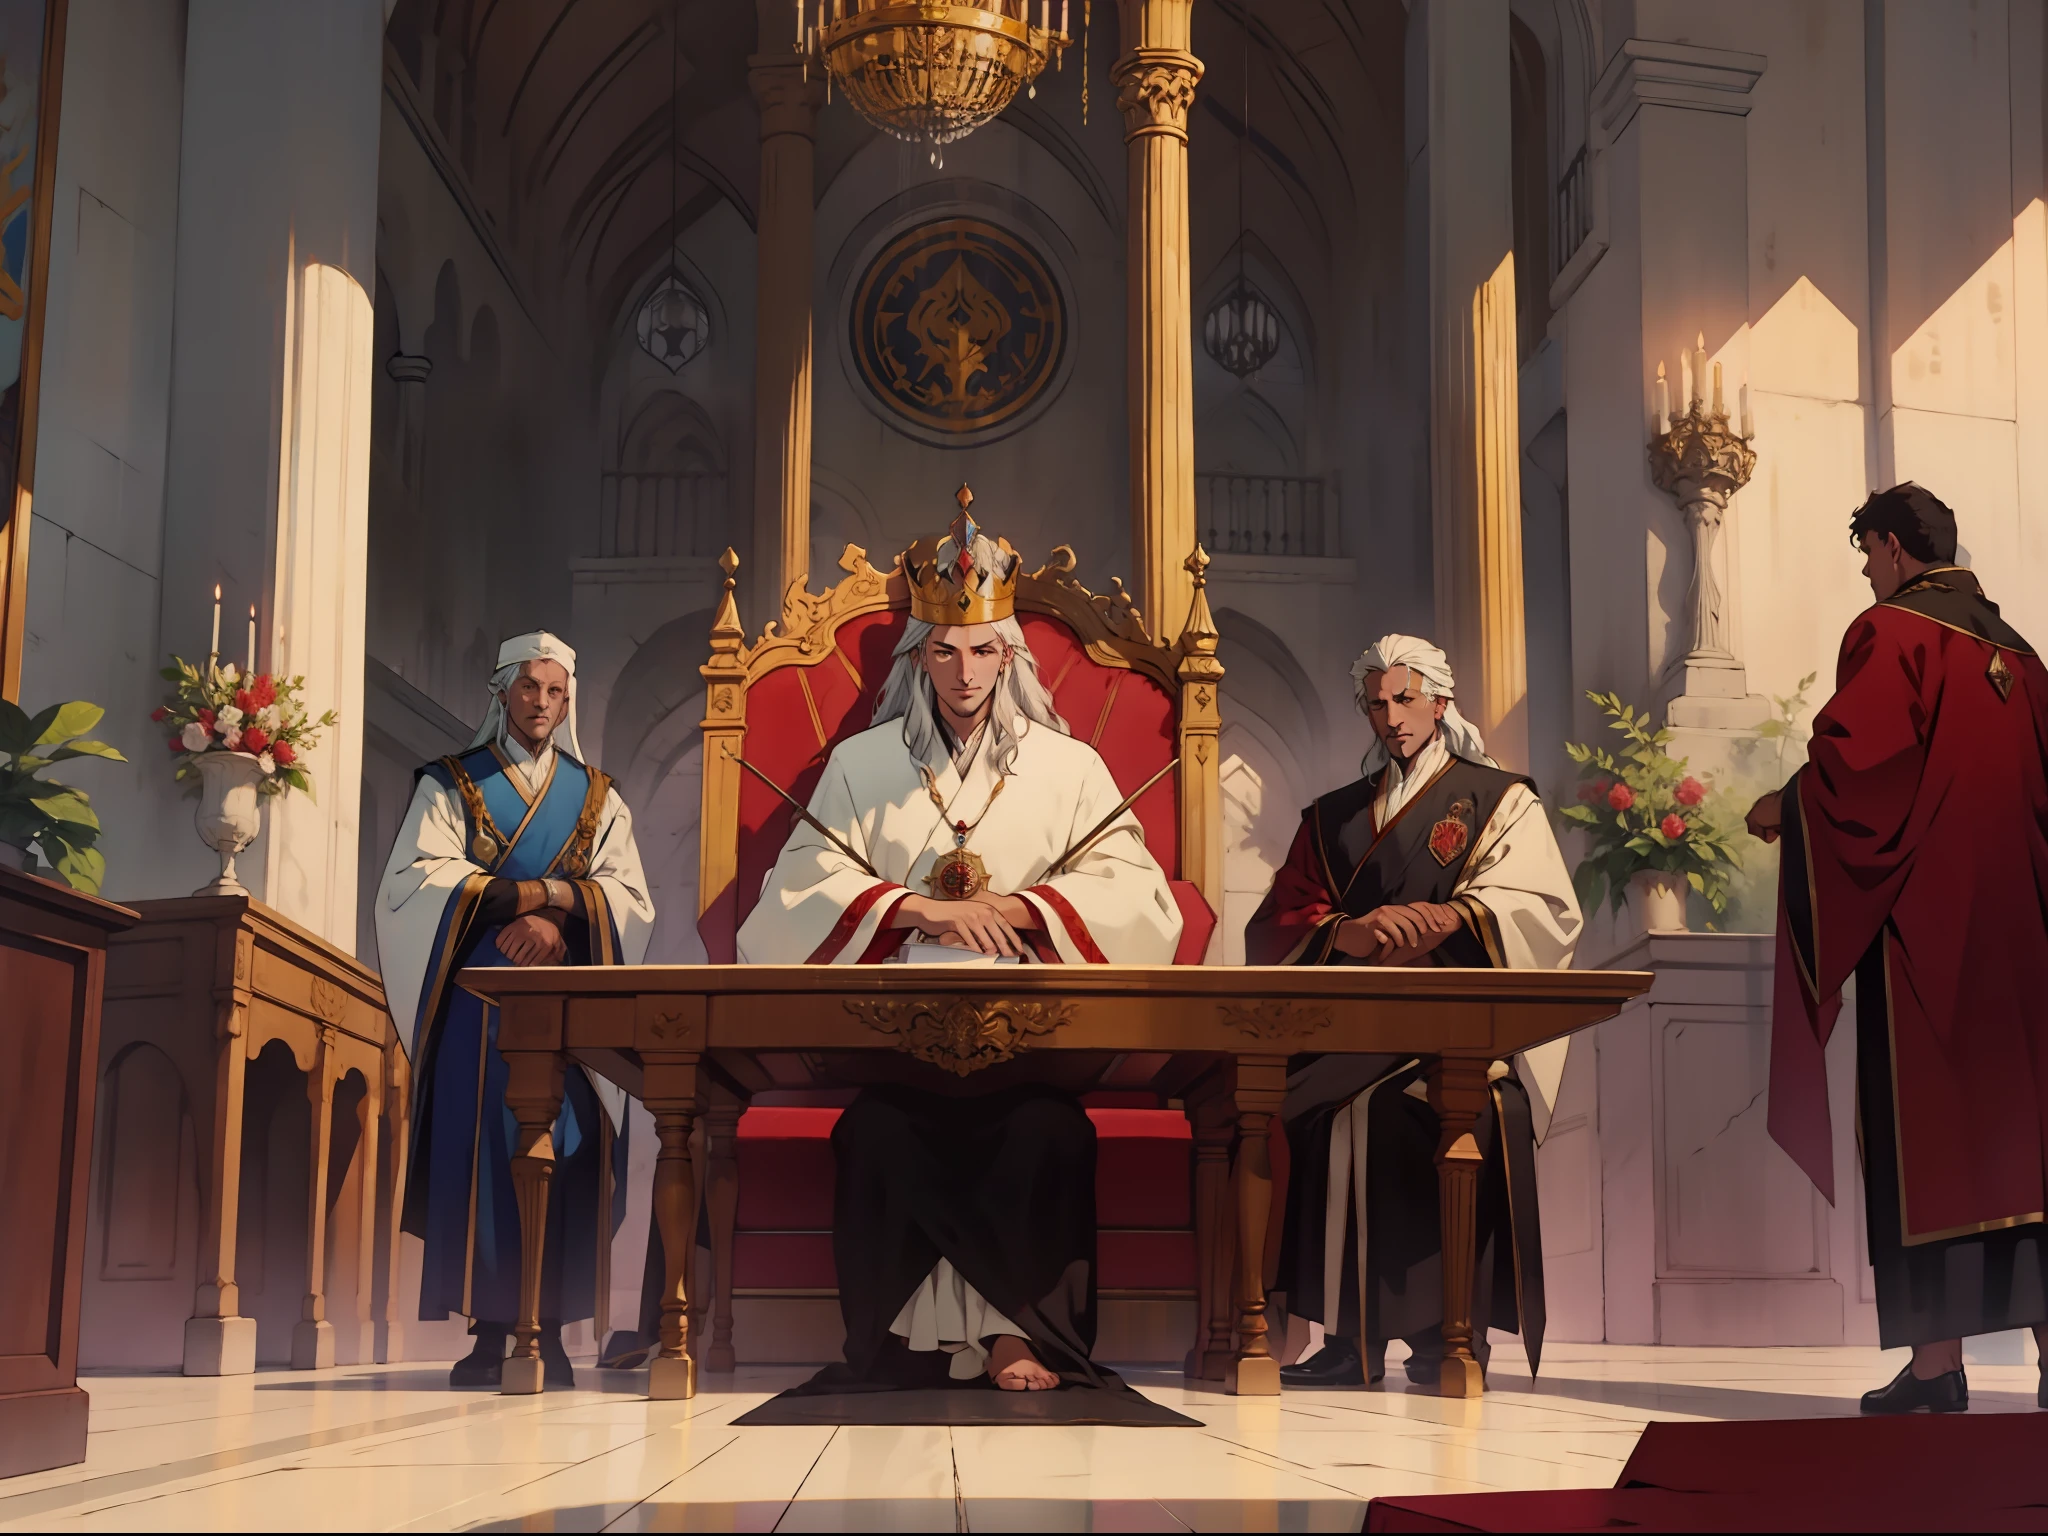 Kings council